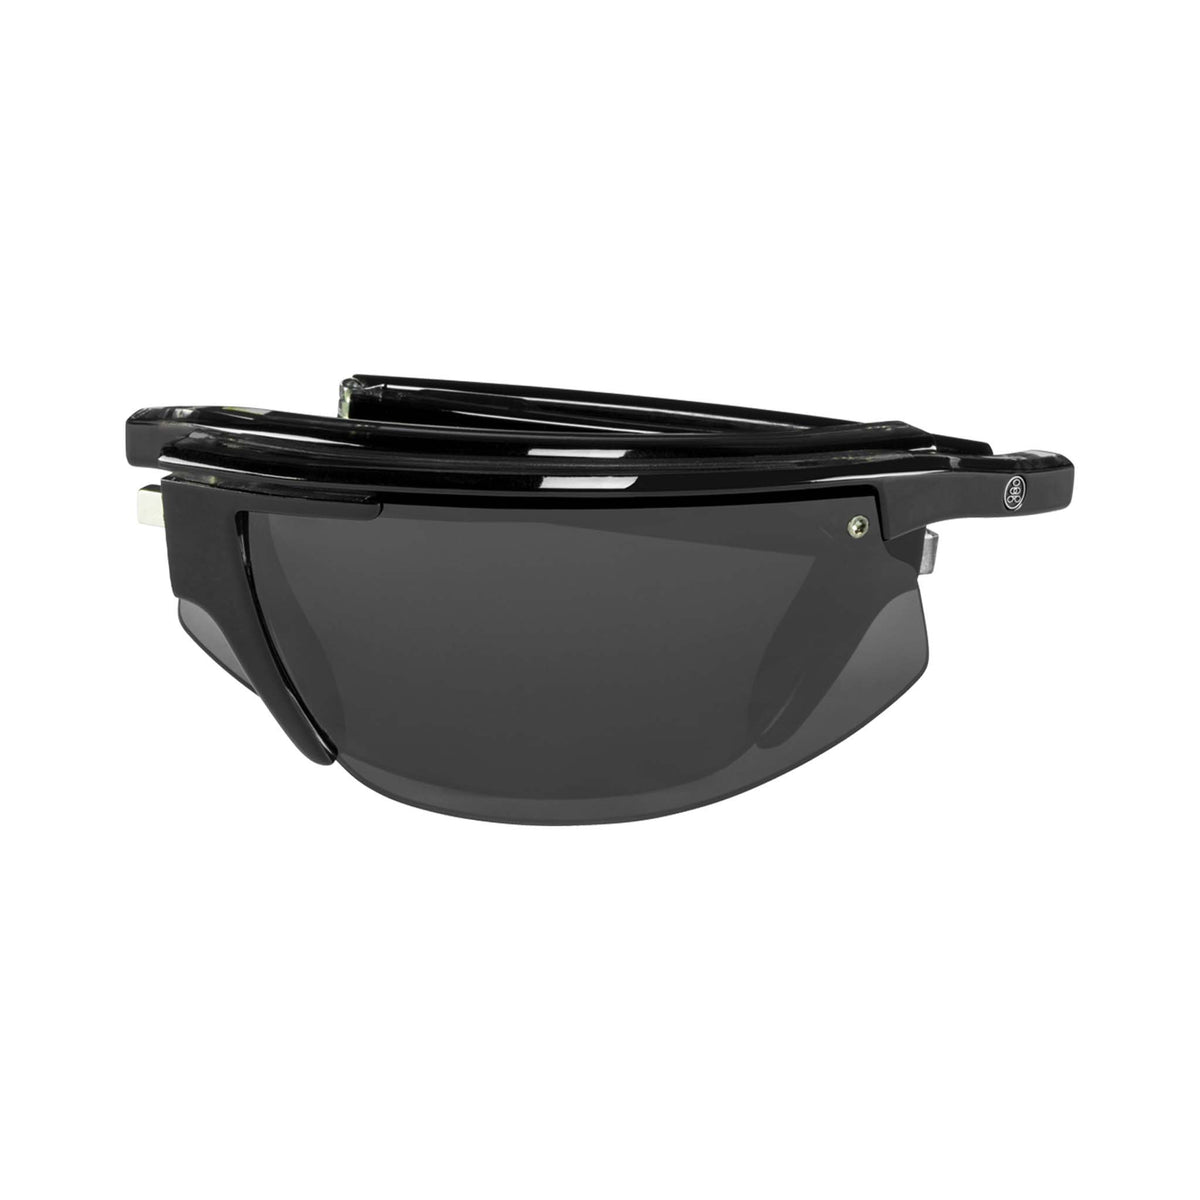 Popticals, Premium Compact Sunglasses, PopStar, 040040-BLGP, Polarized Sunglasses, Gloss Black Crystal Frame, Gray Lenses, Compact View